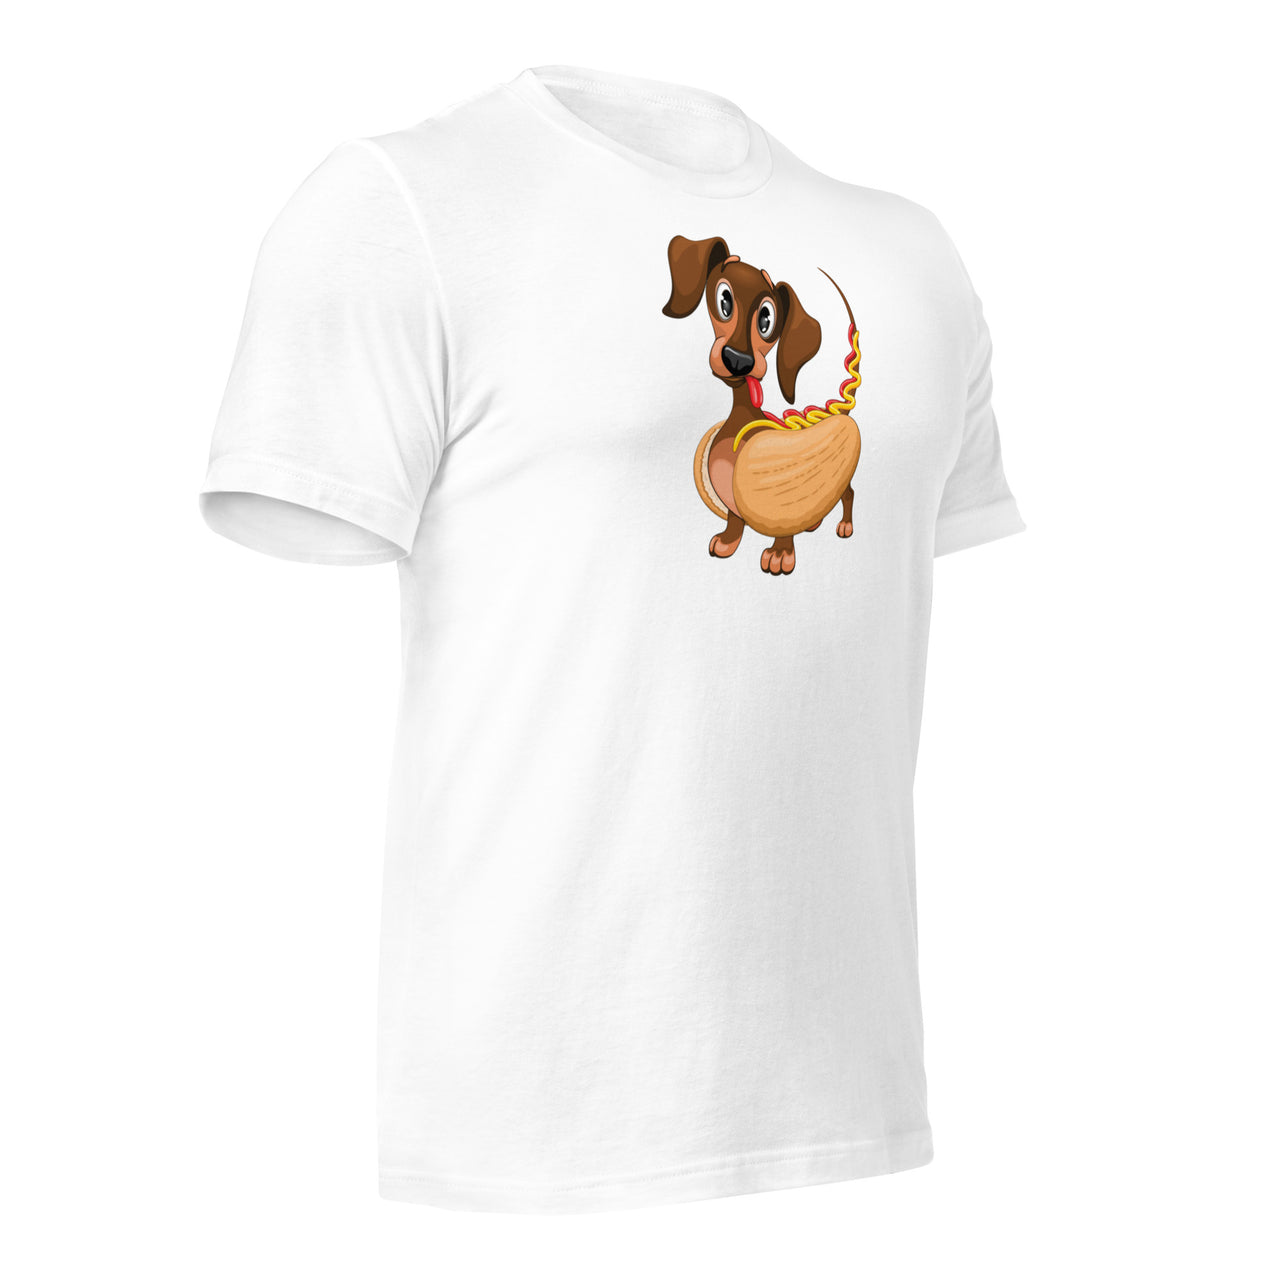 T-shirt Dog Hot Dog Girls